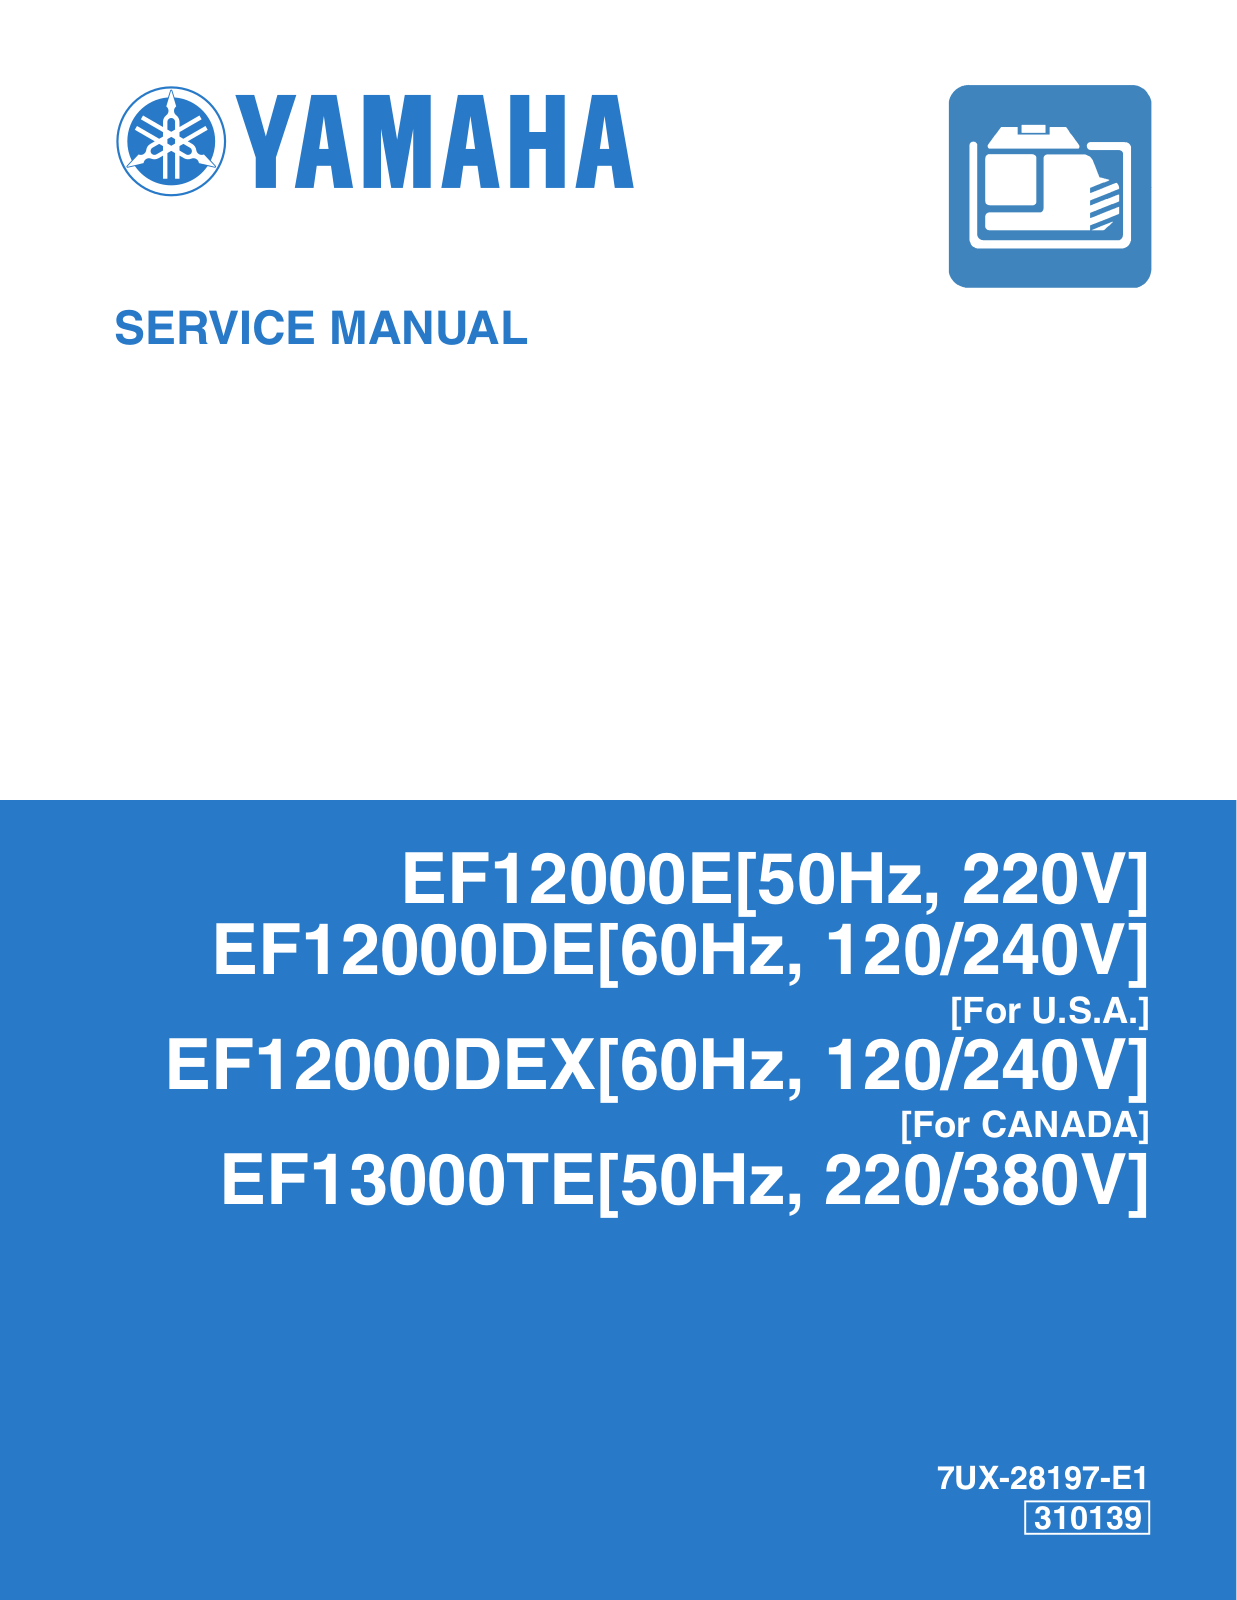 YAMAHA EF12000DEX, EF13000TE SERVICE MANUAL